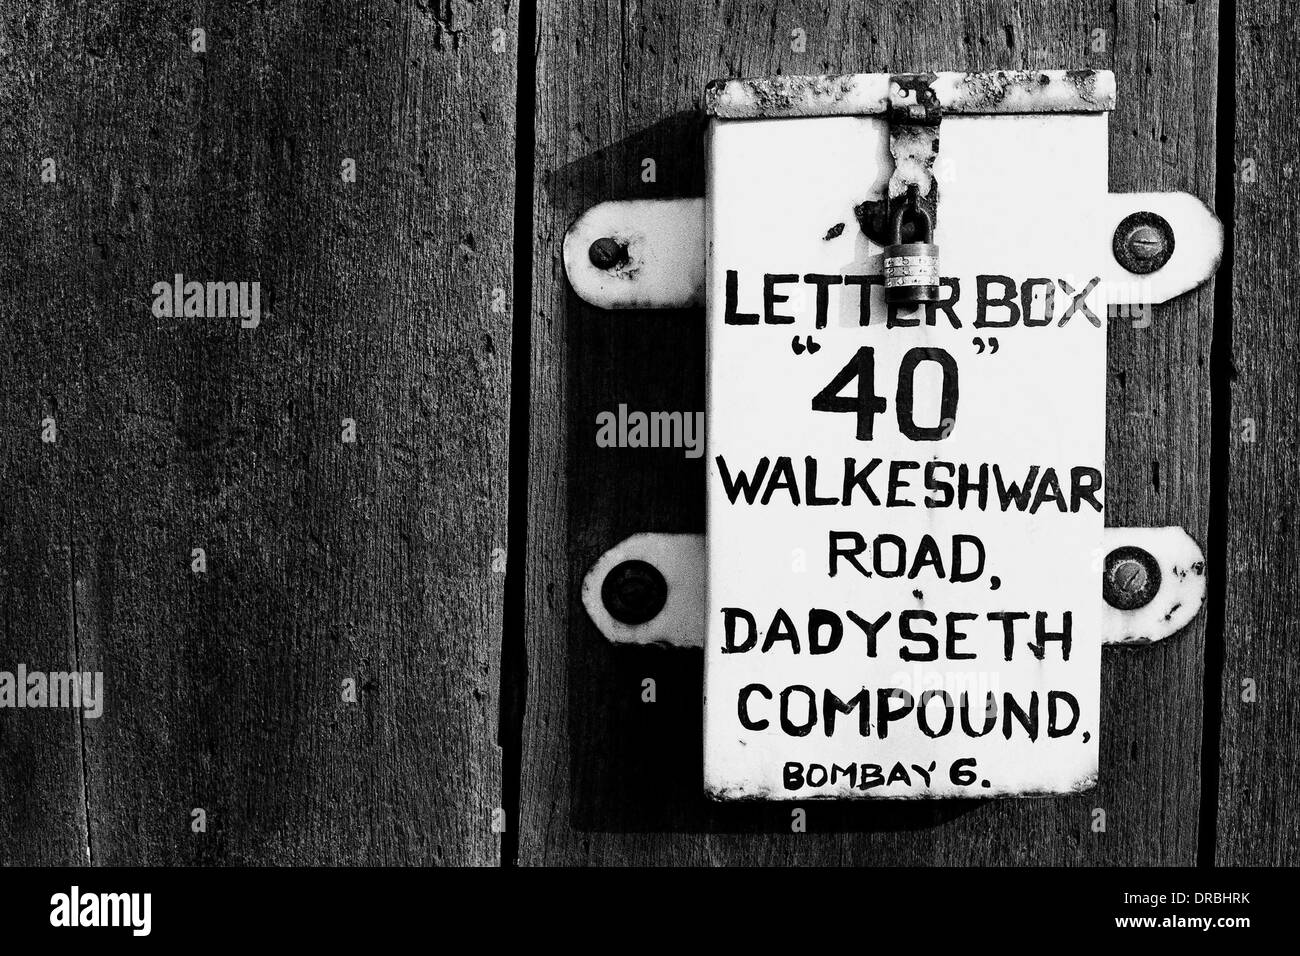 Letter box, Walkeshwar Road, Mumbai, Maharashtra, India, 1982 Stock Photo